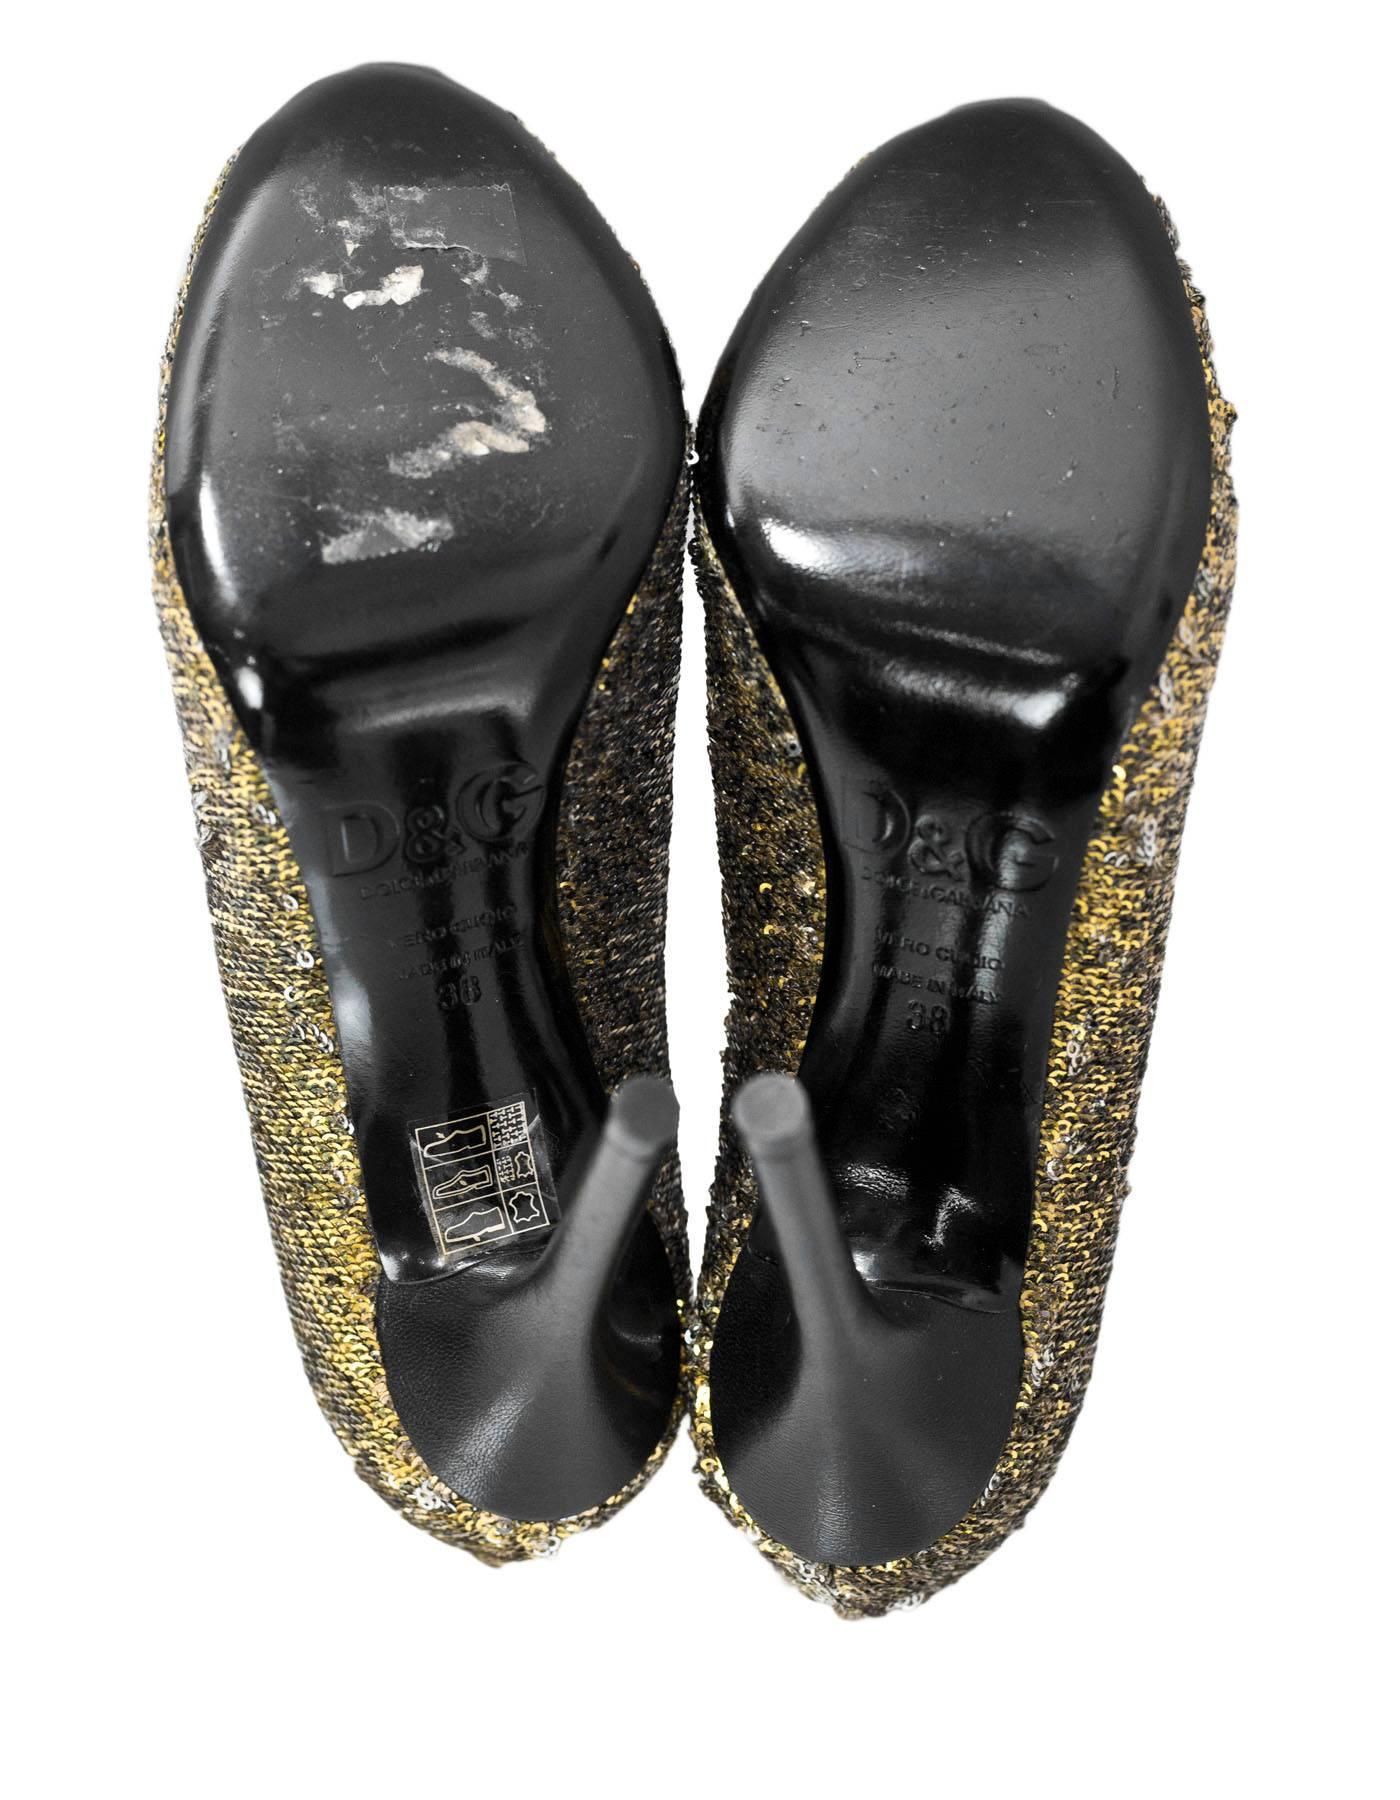 Women's D&G Dolce & Gabbana Gold Sequin Pee-Toe Pumps Size 38